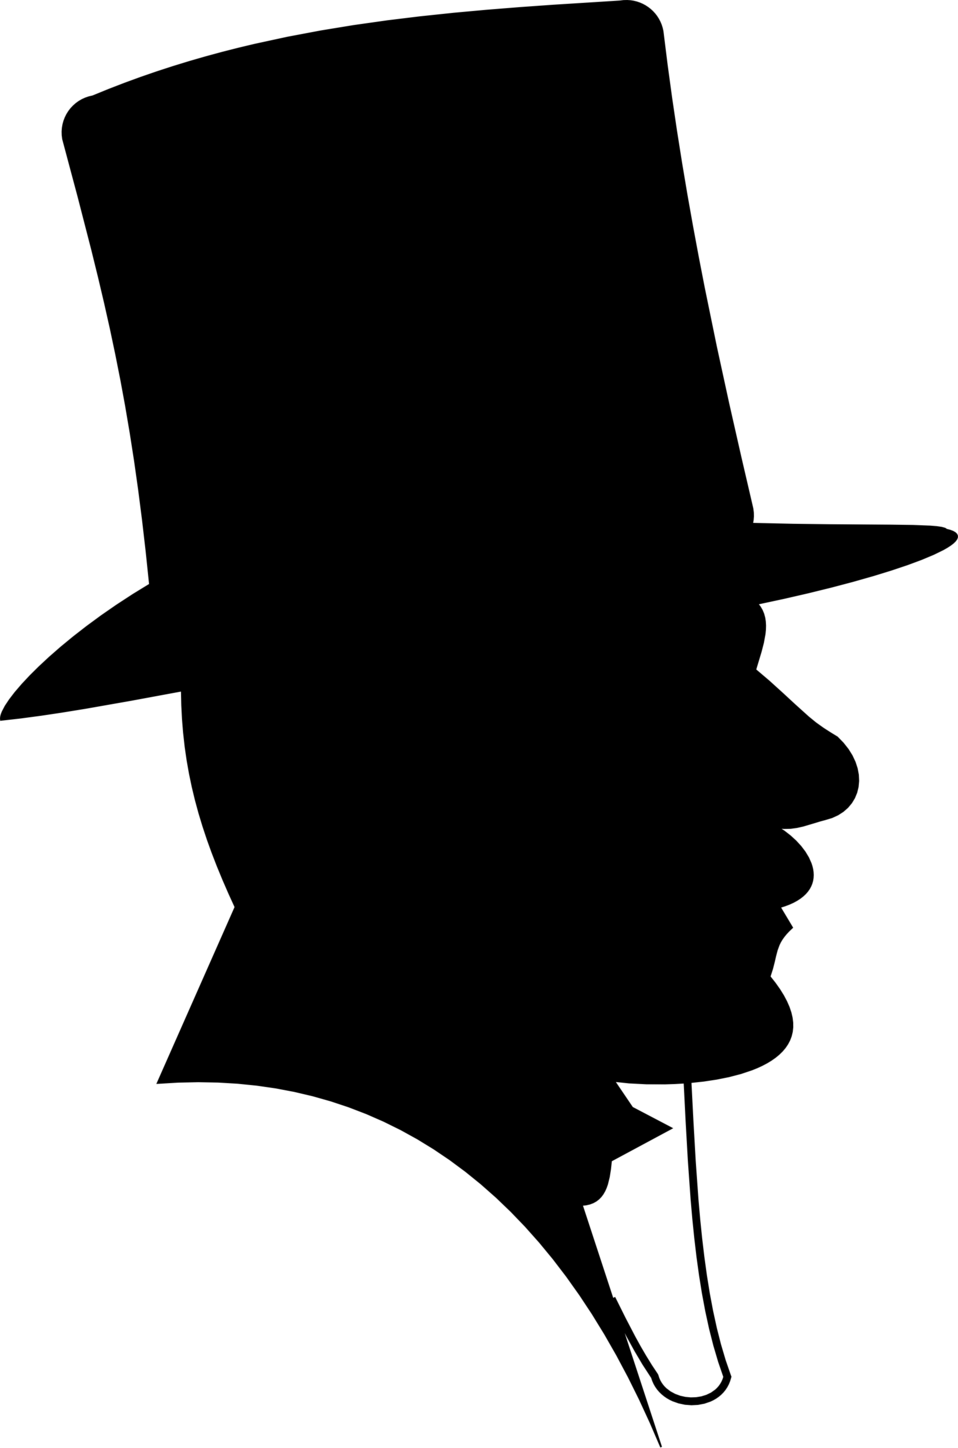 Public Domain Clip Art Image Victorian Man With Top Hat Silhouette 